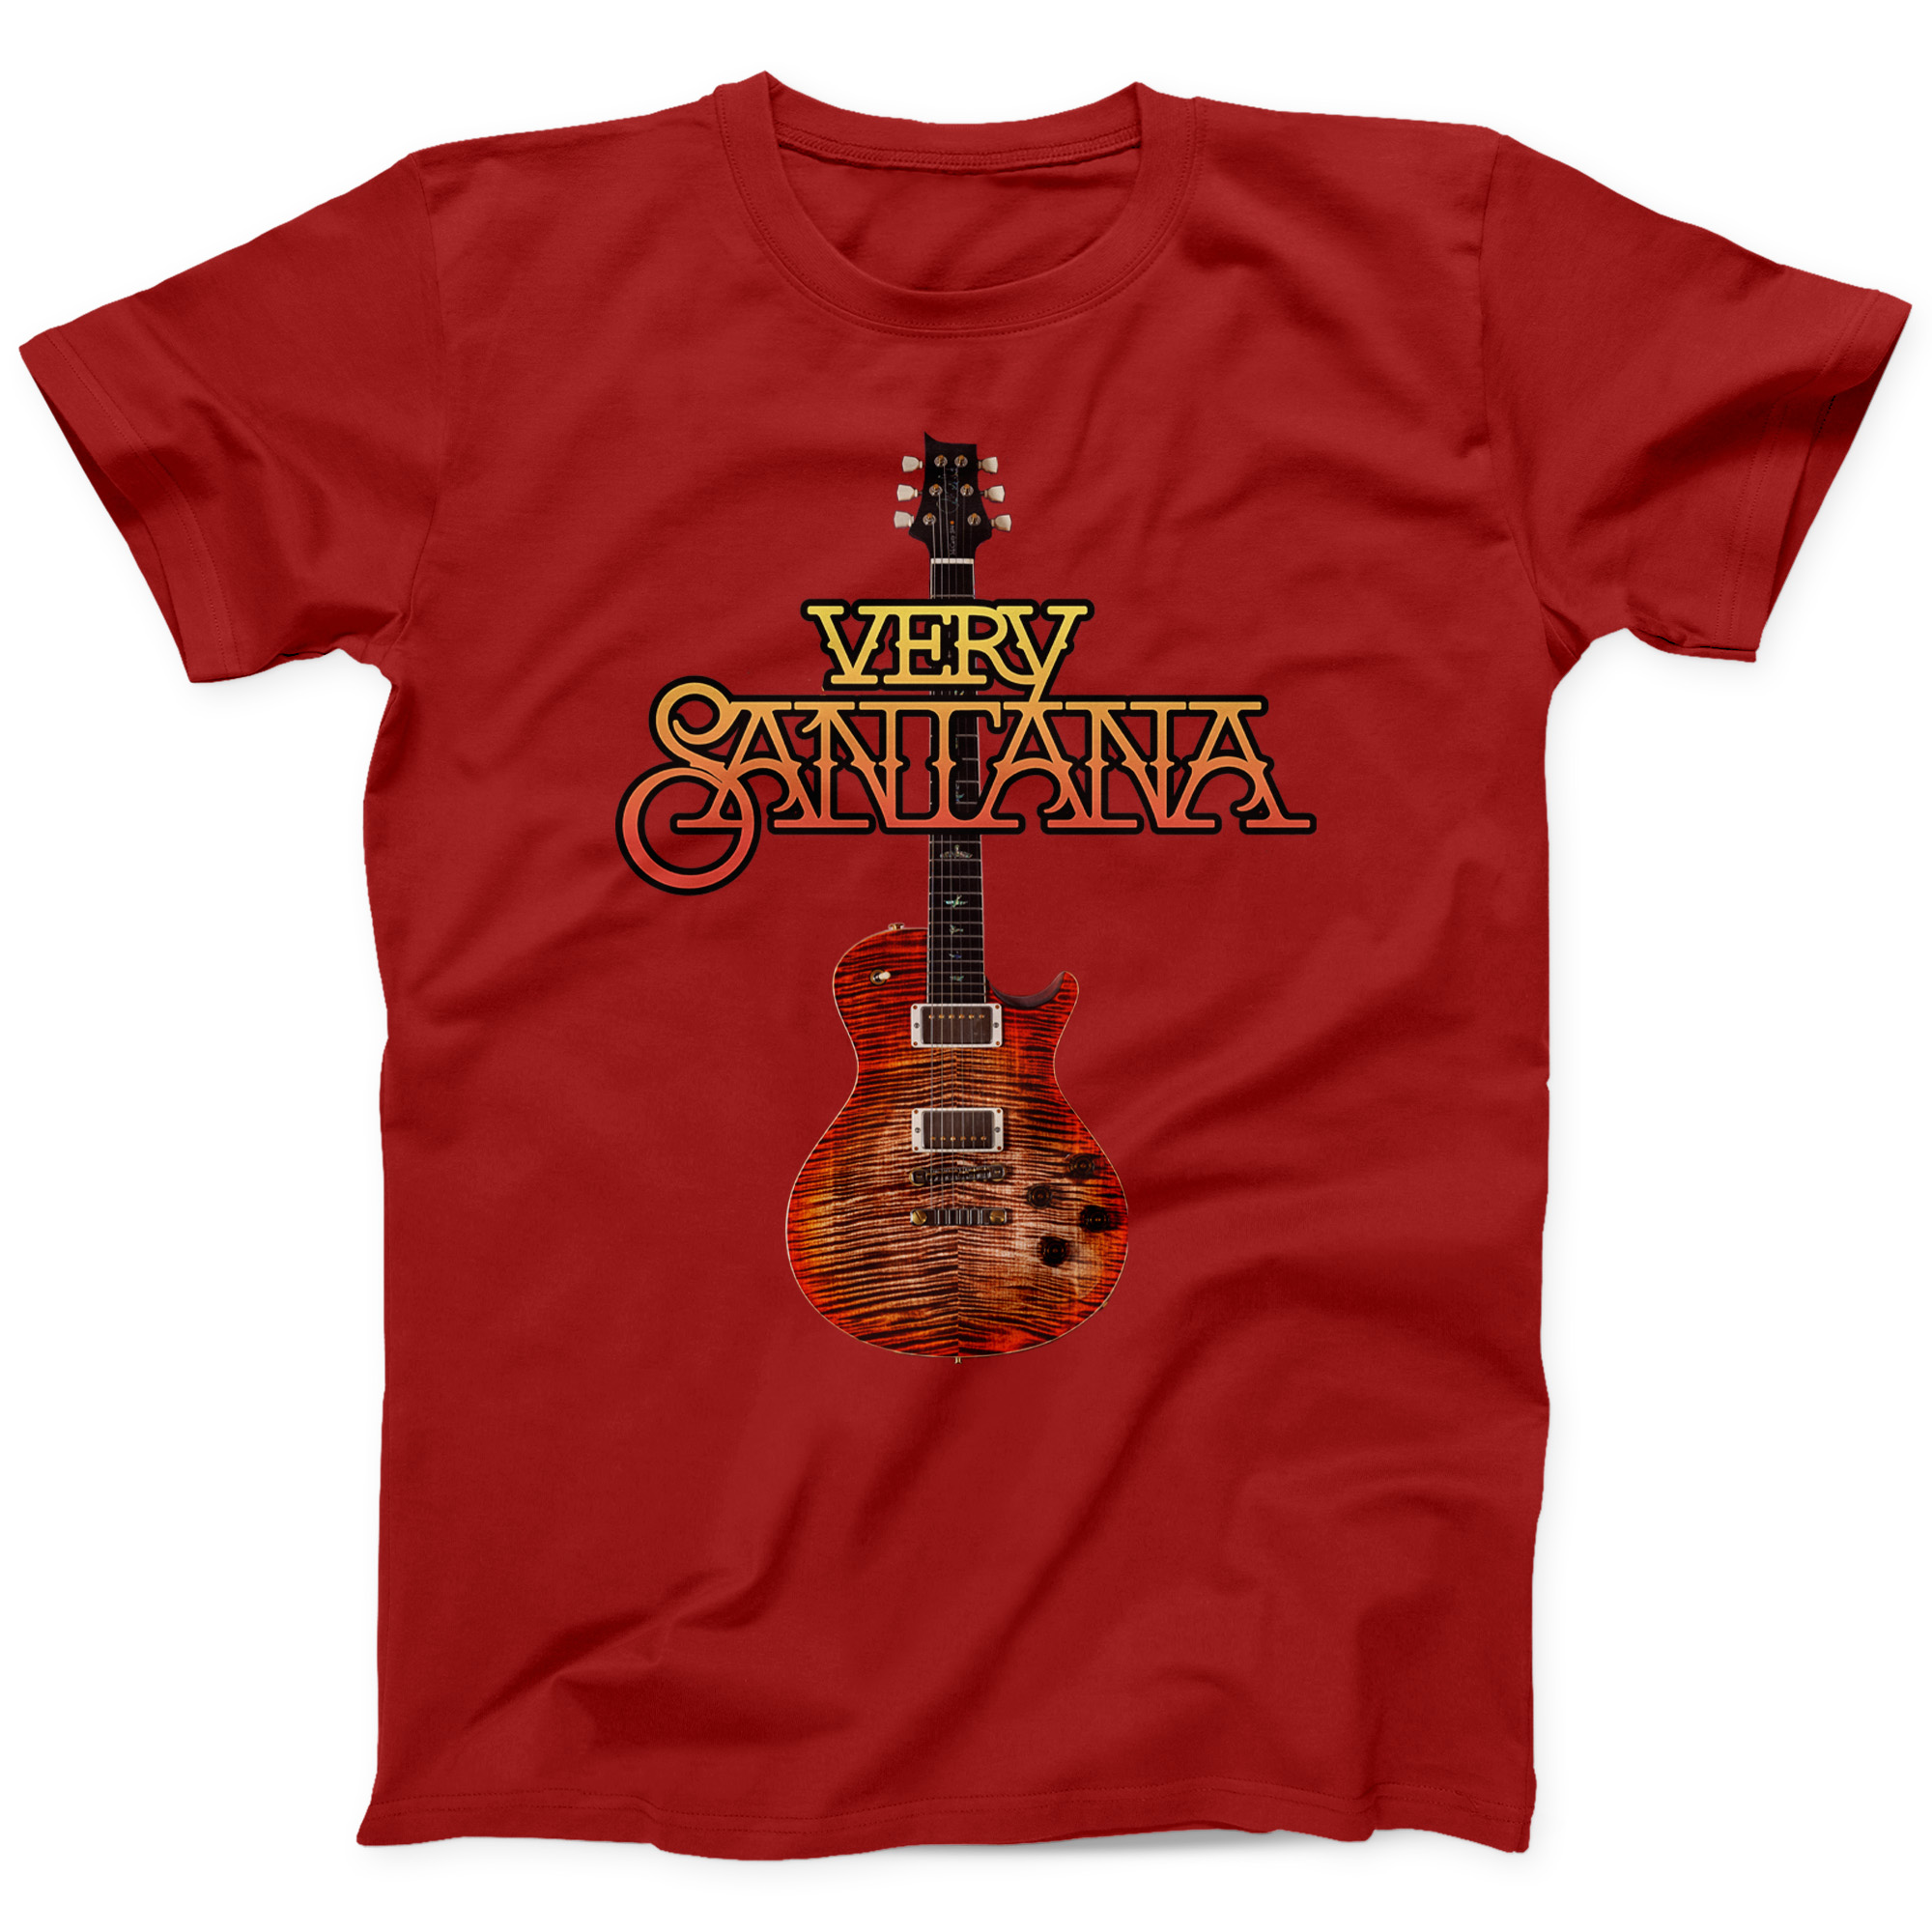 Red "Very Santana" T-Shirt